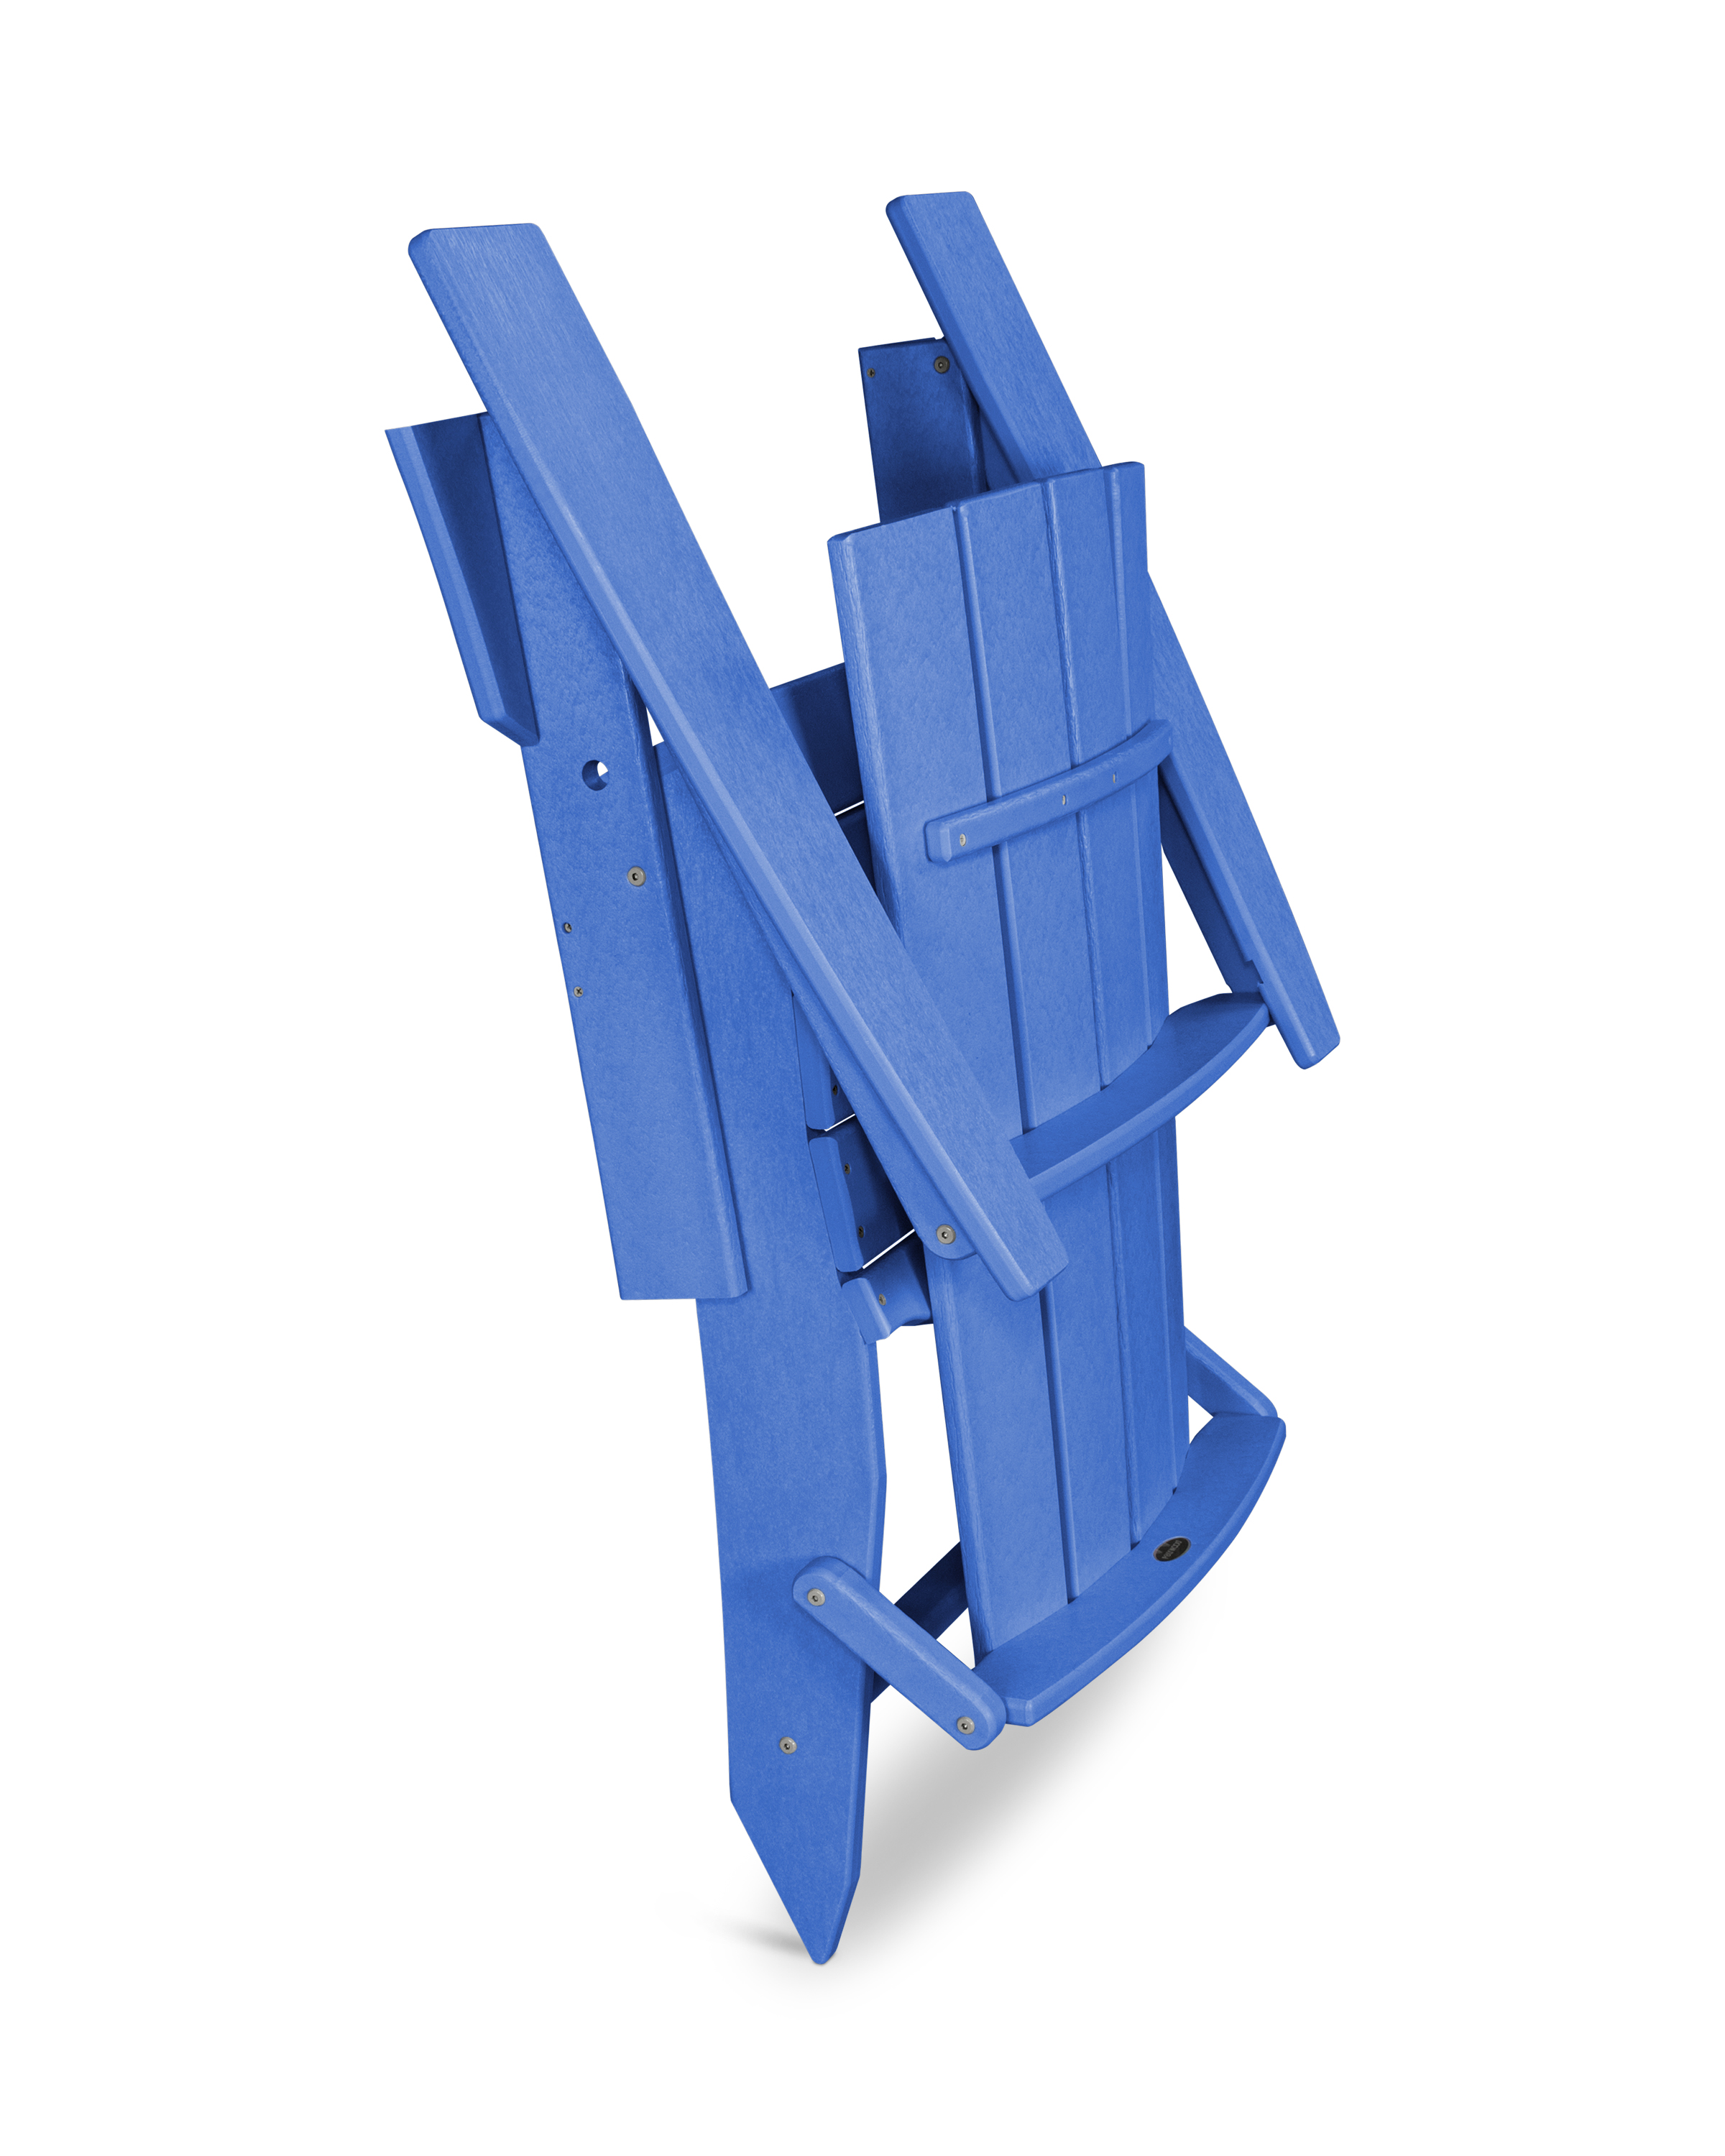 quattro folding adirondack in pacific blue thumbnail image